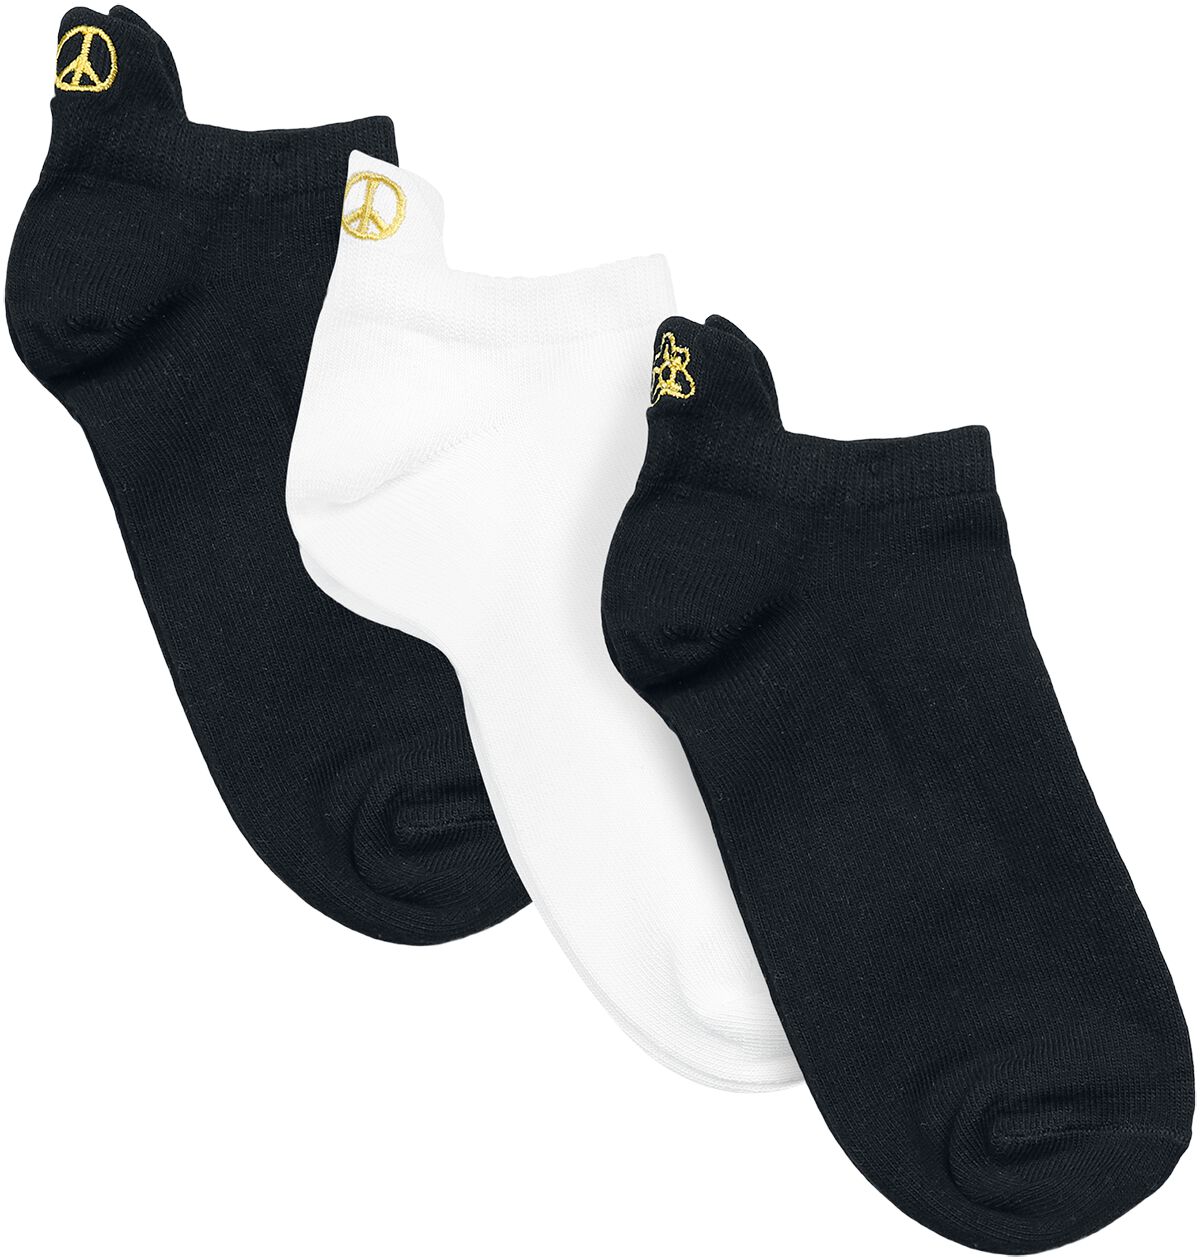 Urban Classics Socken - Peace Fancy Edge No Show Socks 3-Pack - EU39-42 bis EU43-46 - Größe EU 39-42 - schwarz/weiß